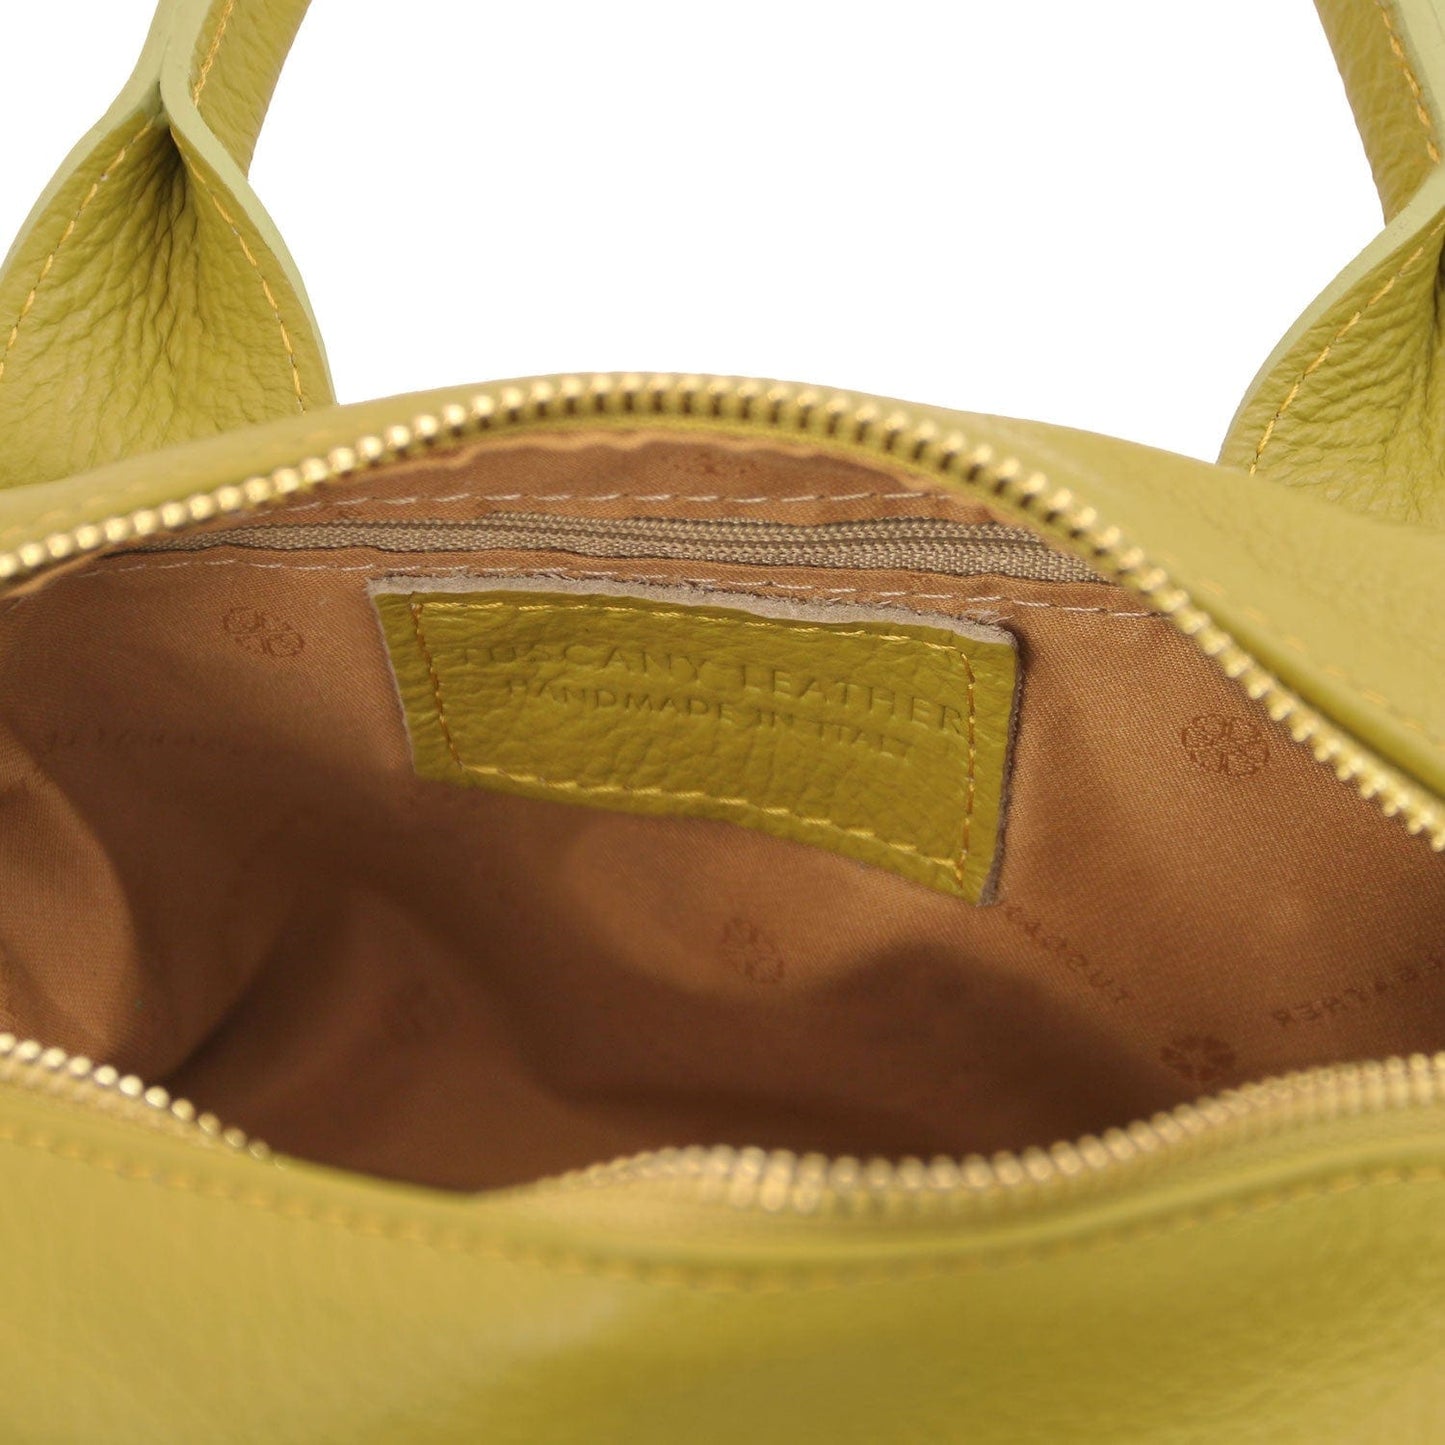 Jade - Leather tote | TL142359 - Premium Leather handbags - Shop now at San Rocco Italia